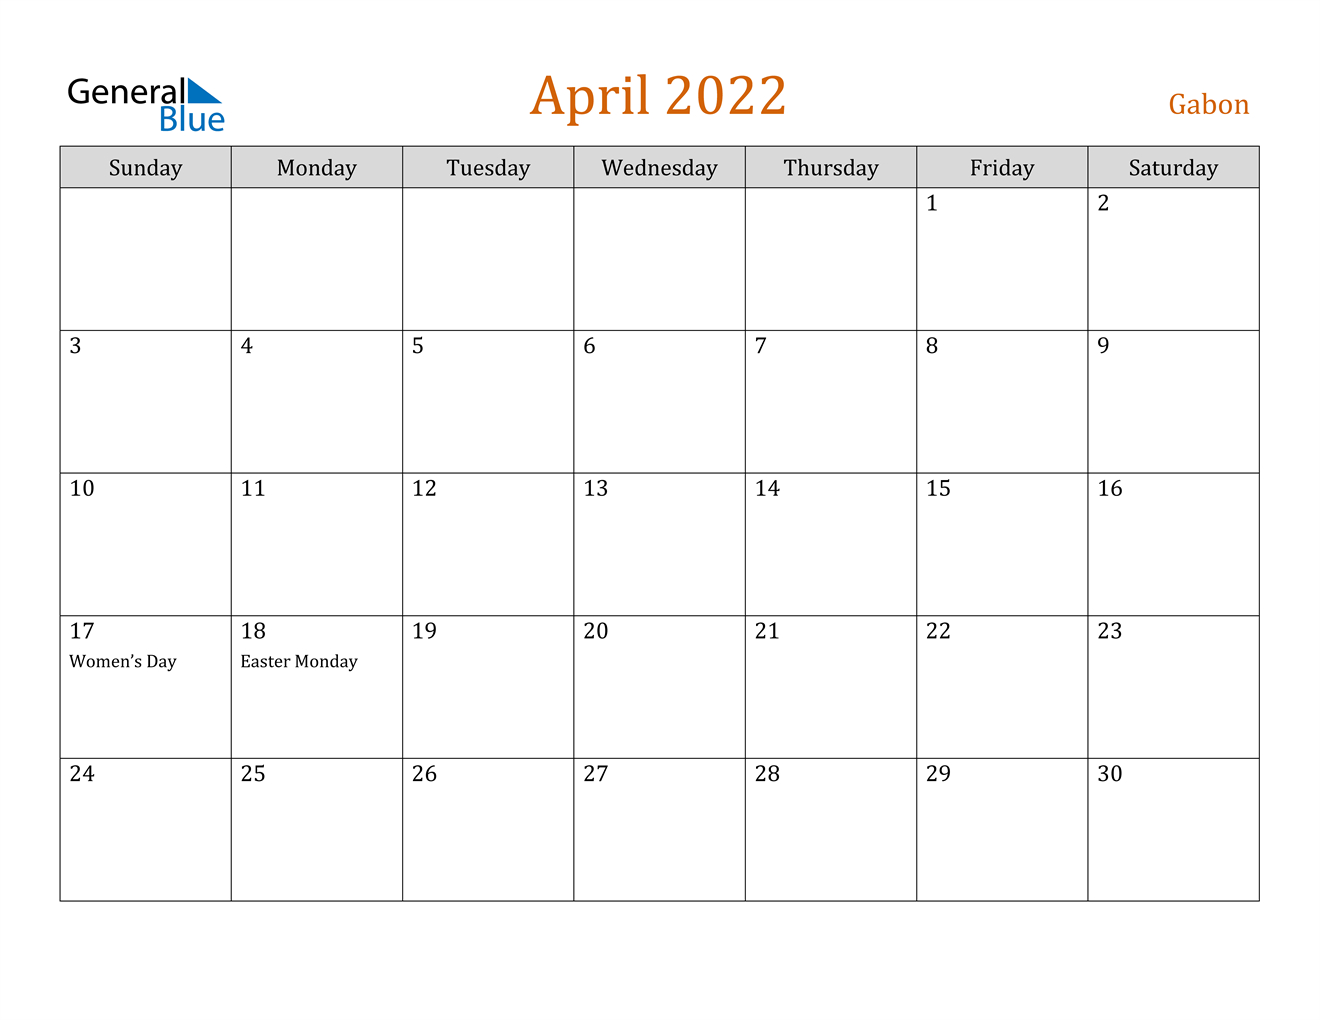 April 2022 Calendar - Gabon